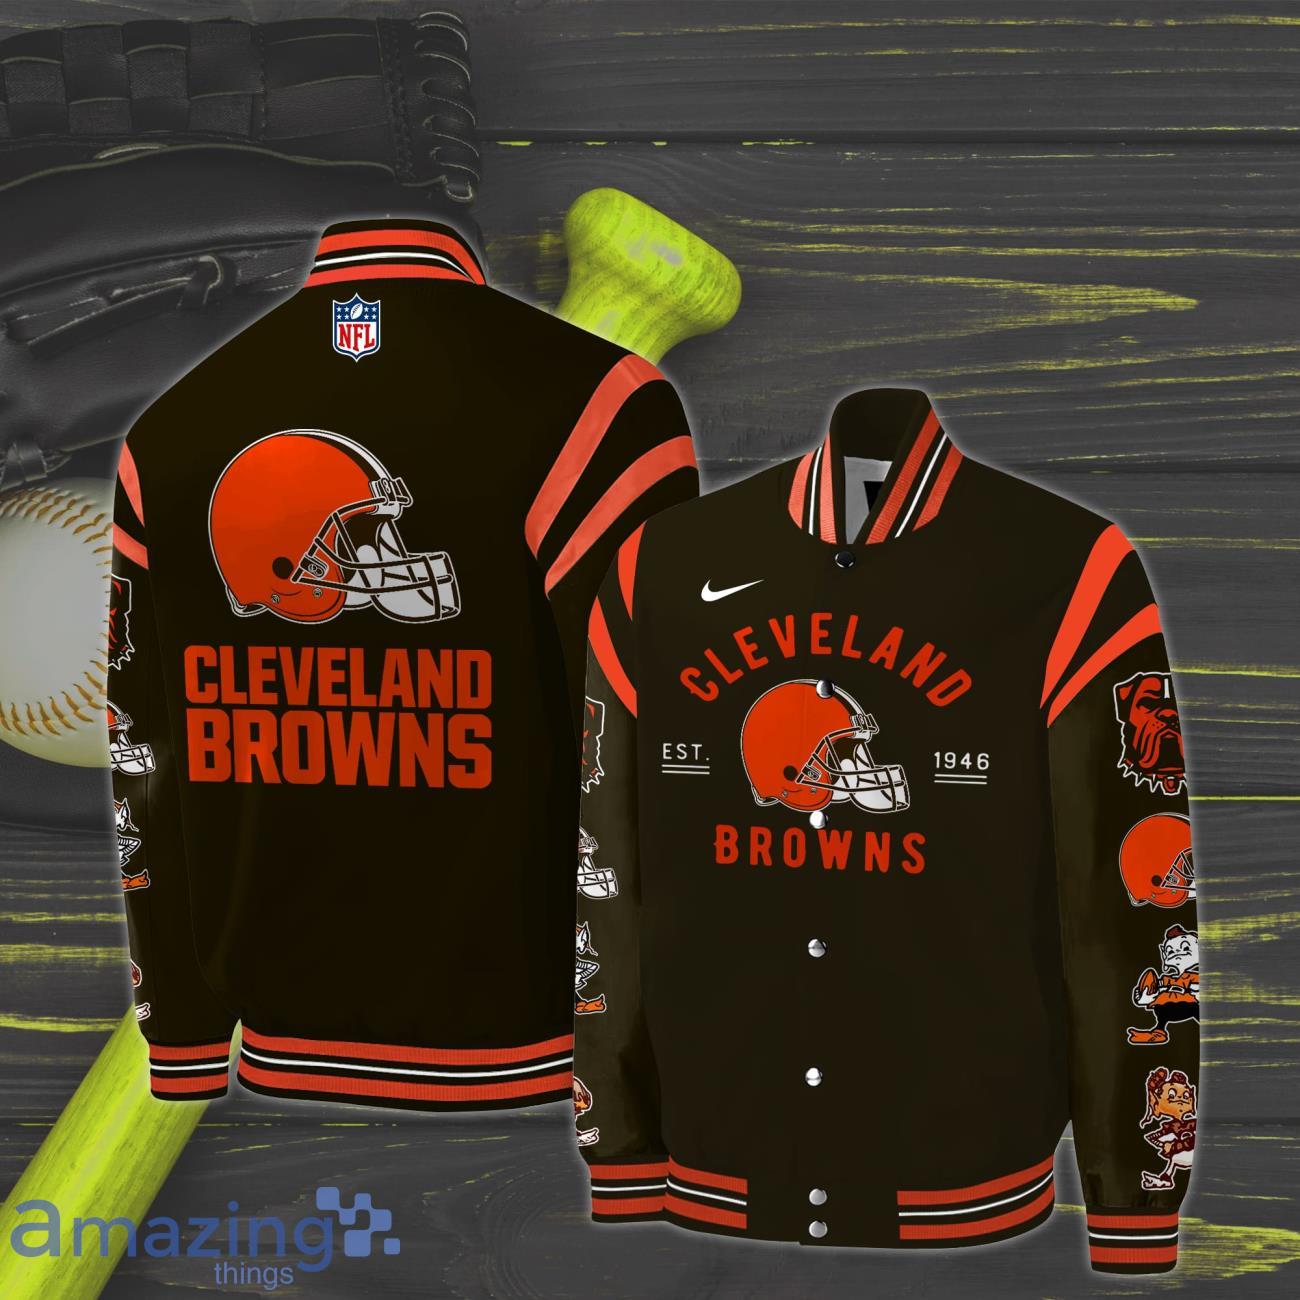 Cleveland Browns Bomber Jacket Product Photo 1